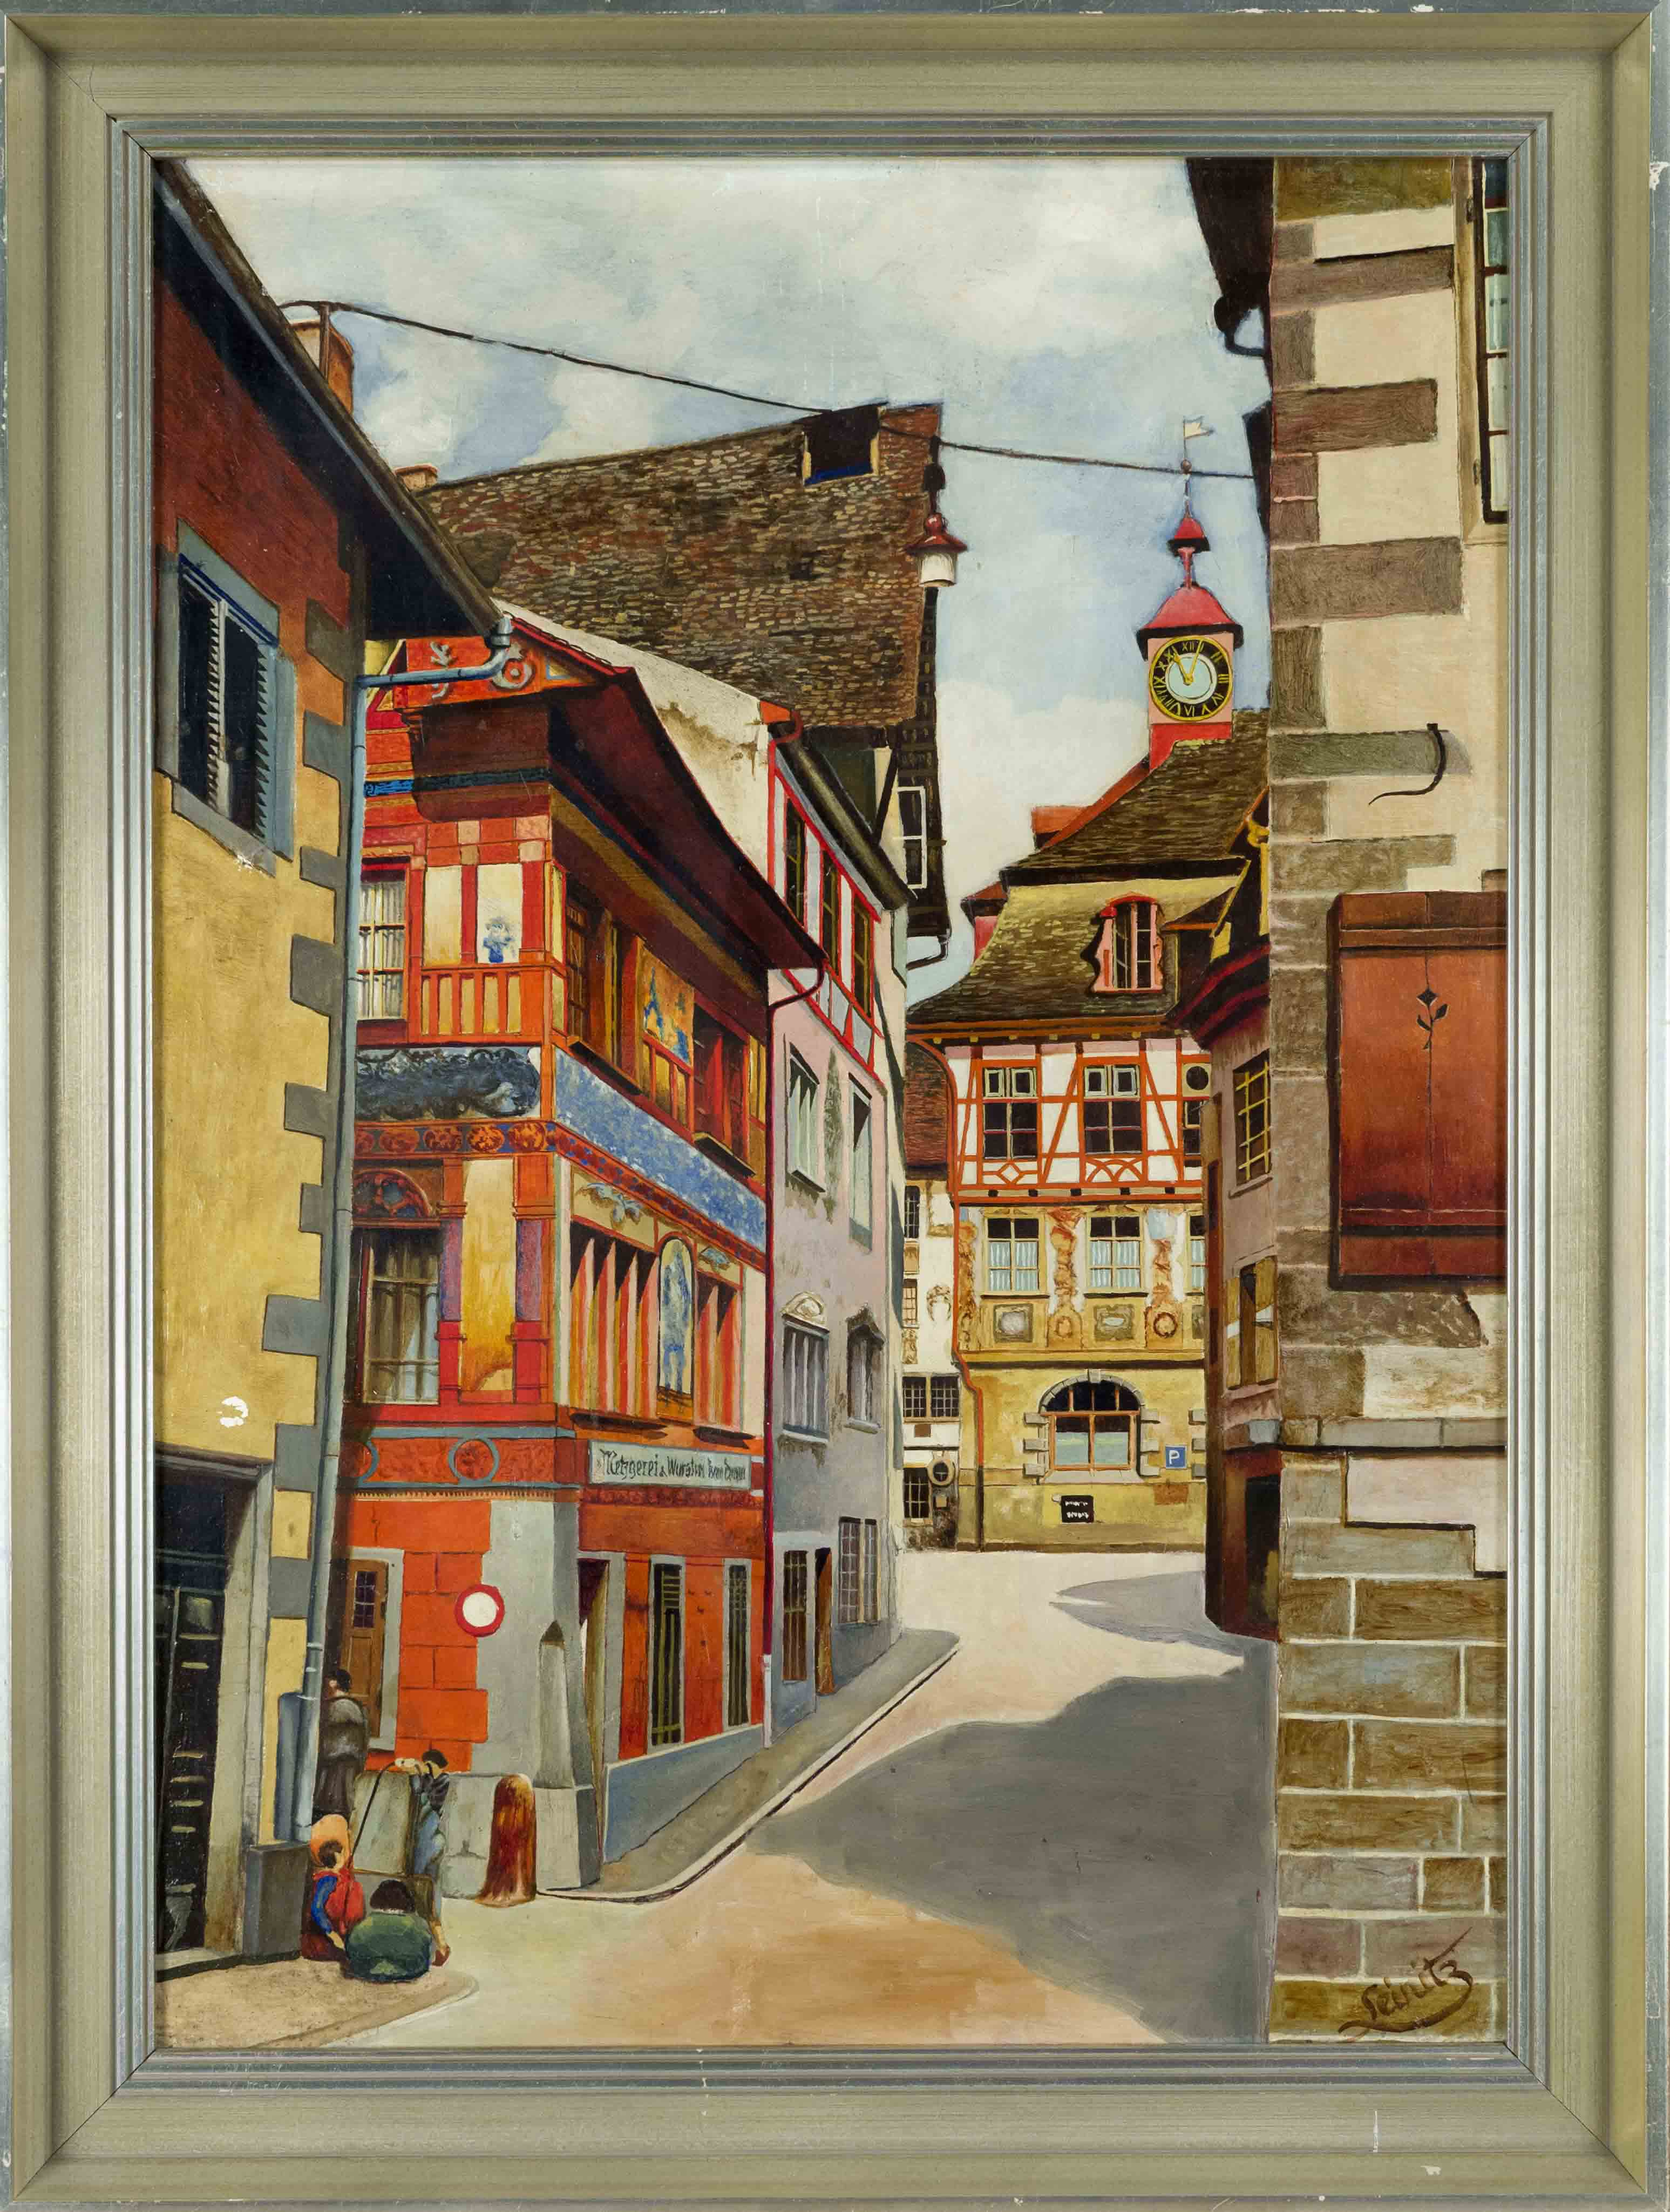 signed Seinitz, mid-20th century, colorful view of Stein am Rhein in Switzerland, oil on